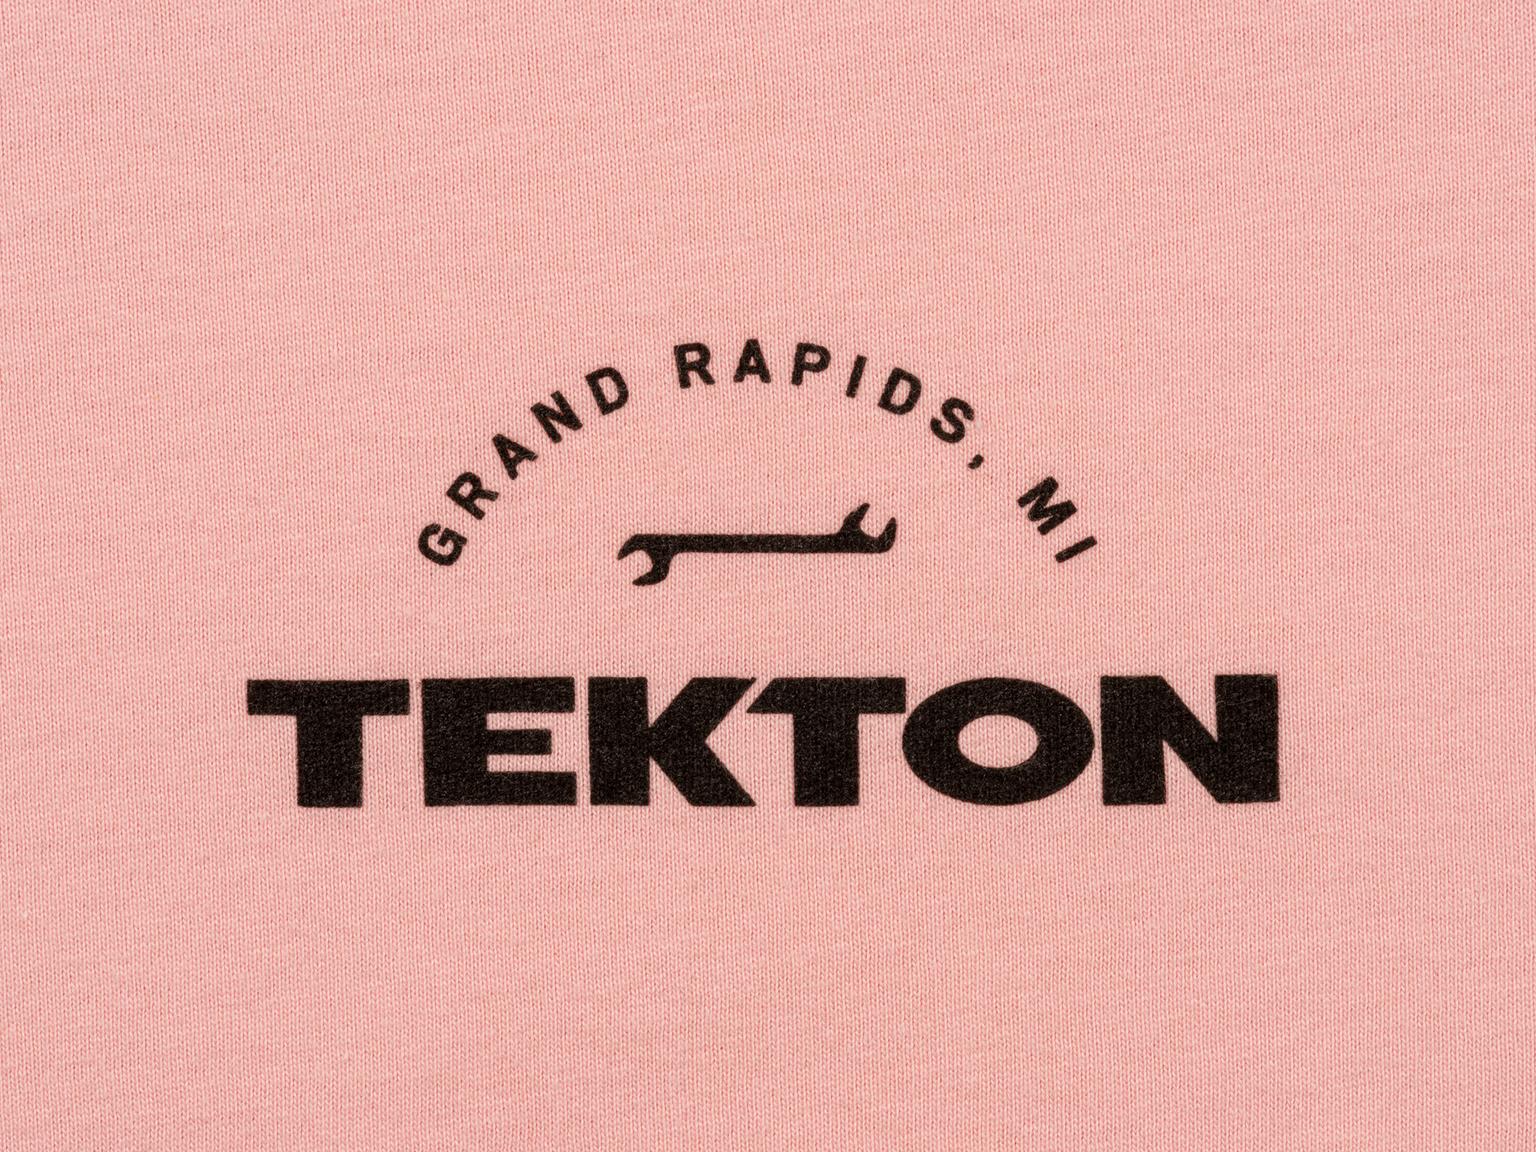 TEKTON APG32044-T Tekton Unisex T-Shirt, Pink (X-Large)